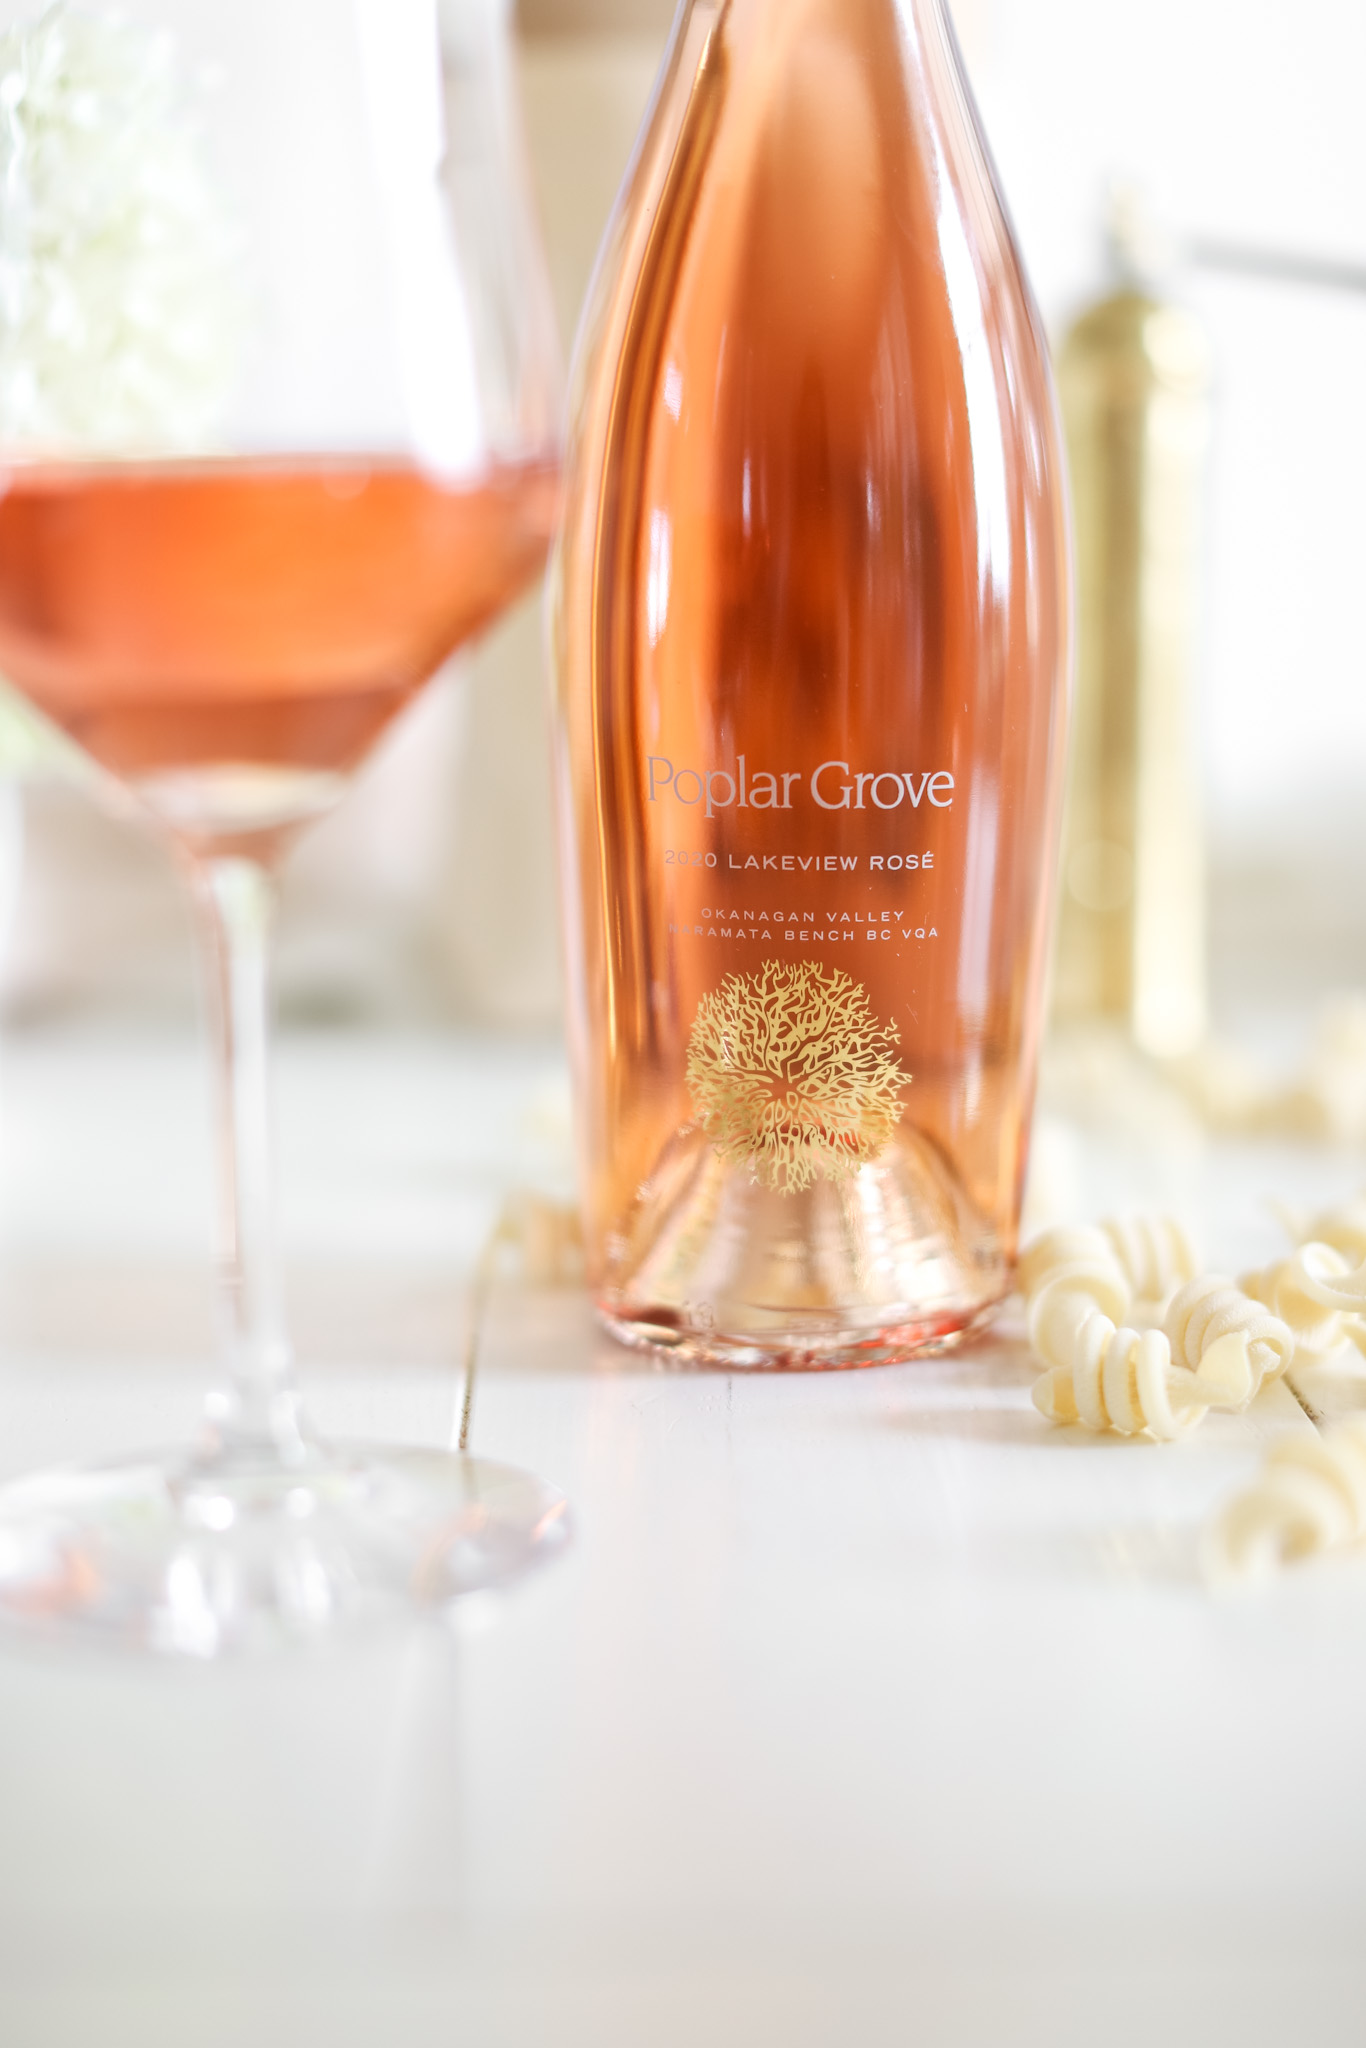 Poplar Grove Lakeview Rose Bottle of wine